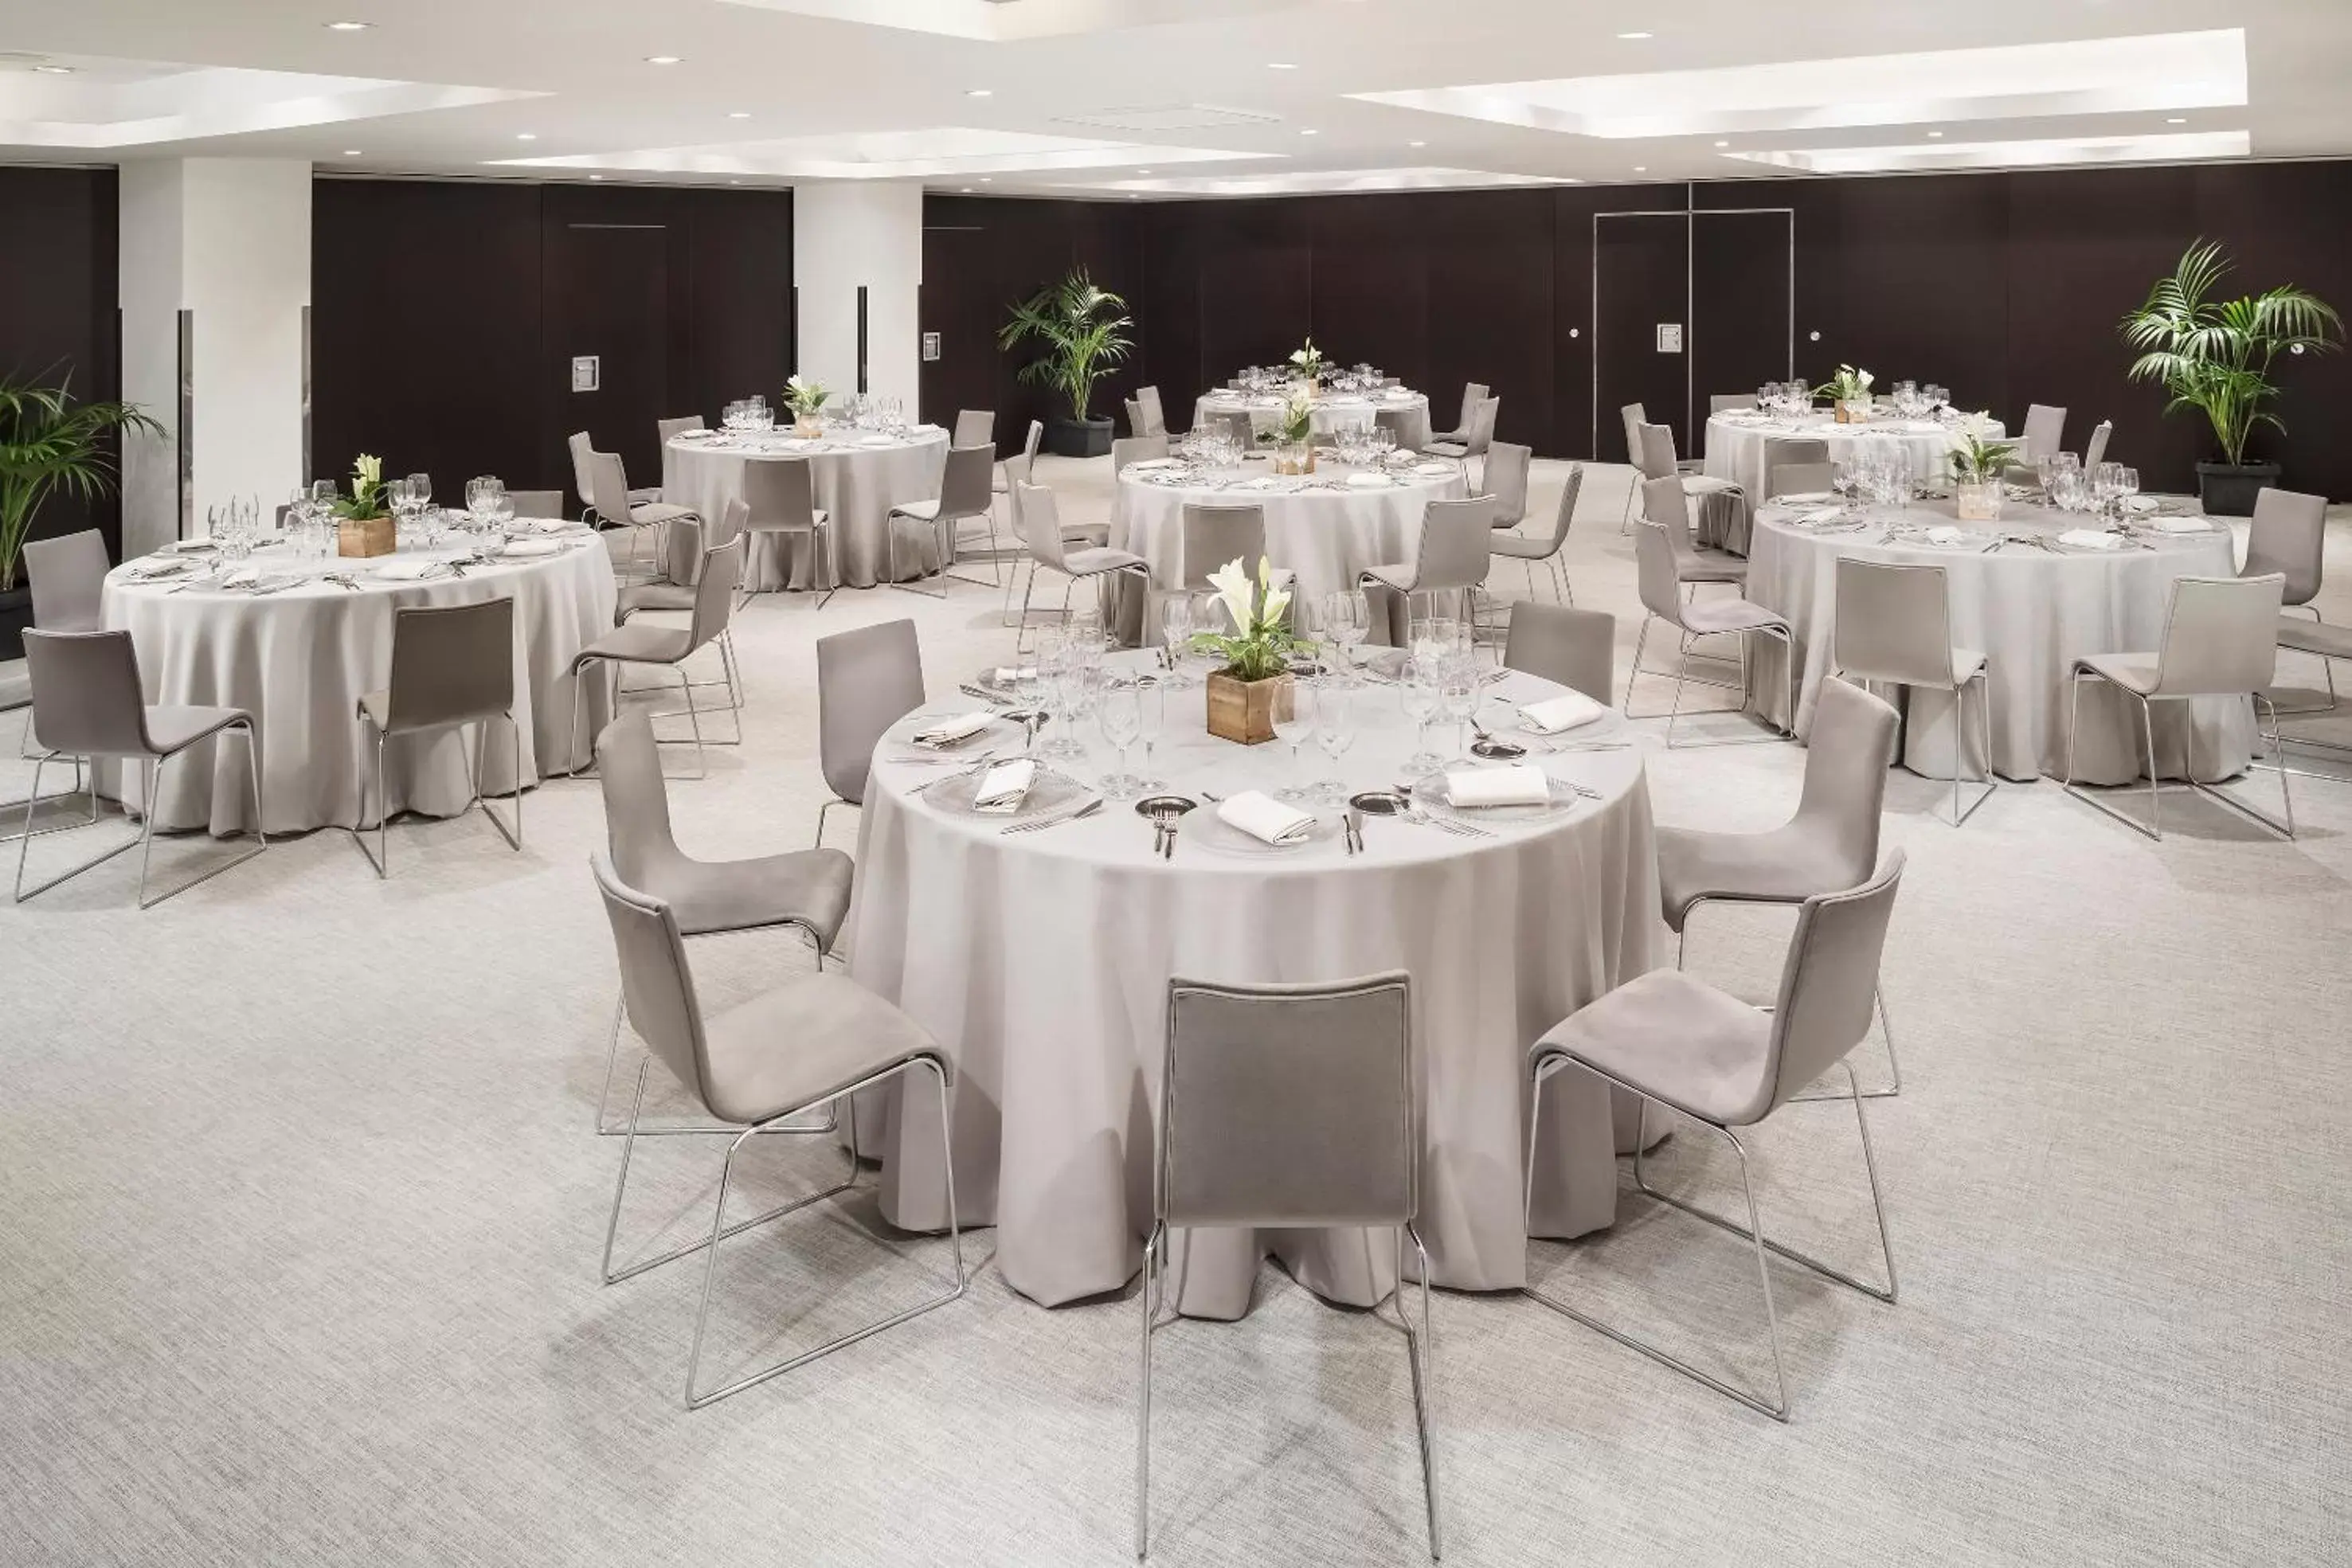 Banquet/Function facilities, Banquet Facilities in Me Madrid Reina Victoria